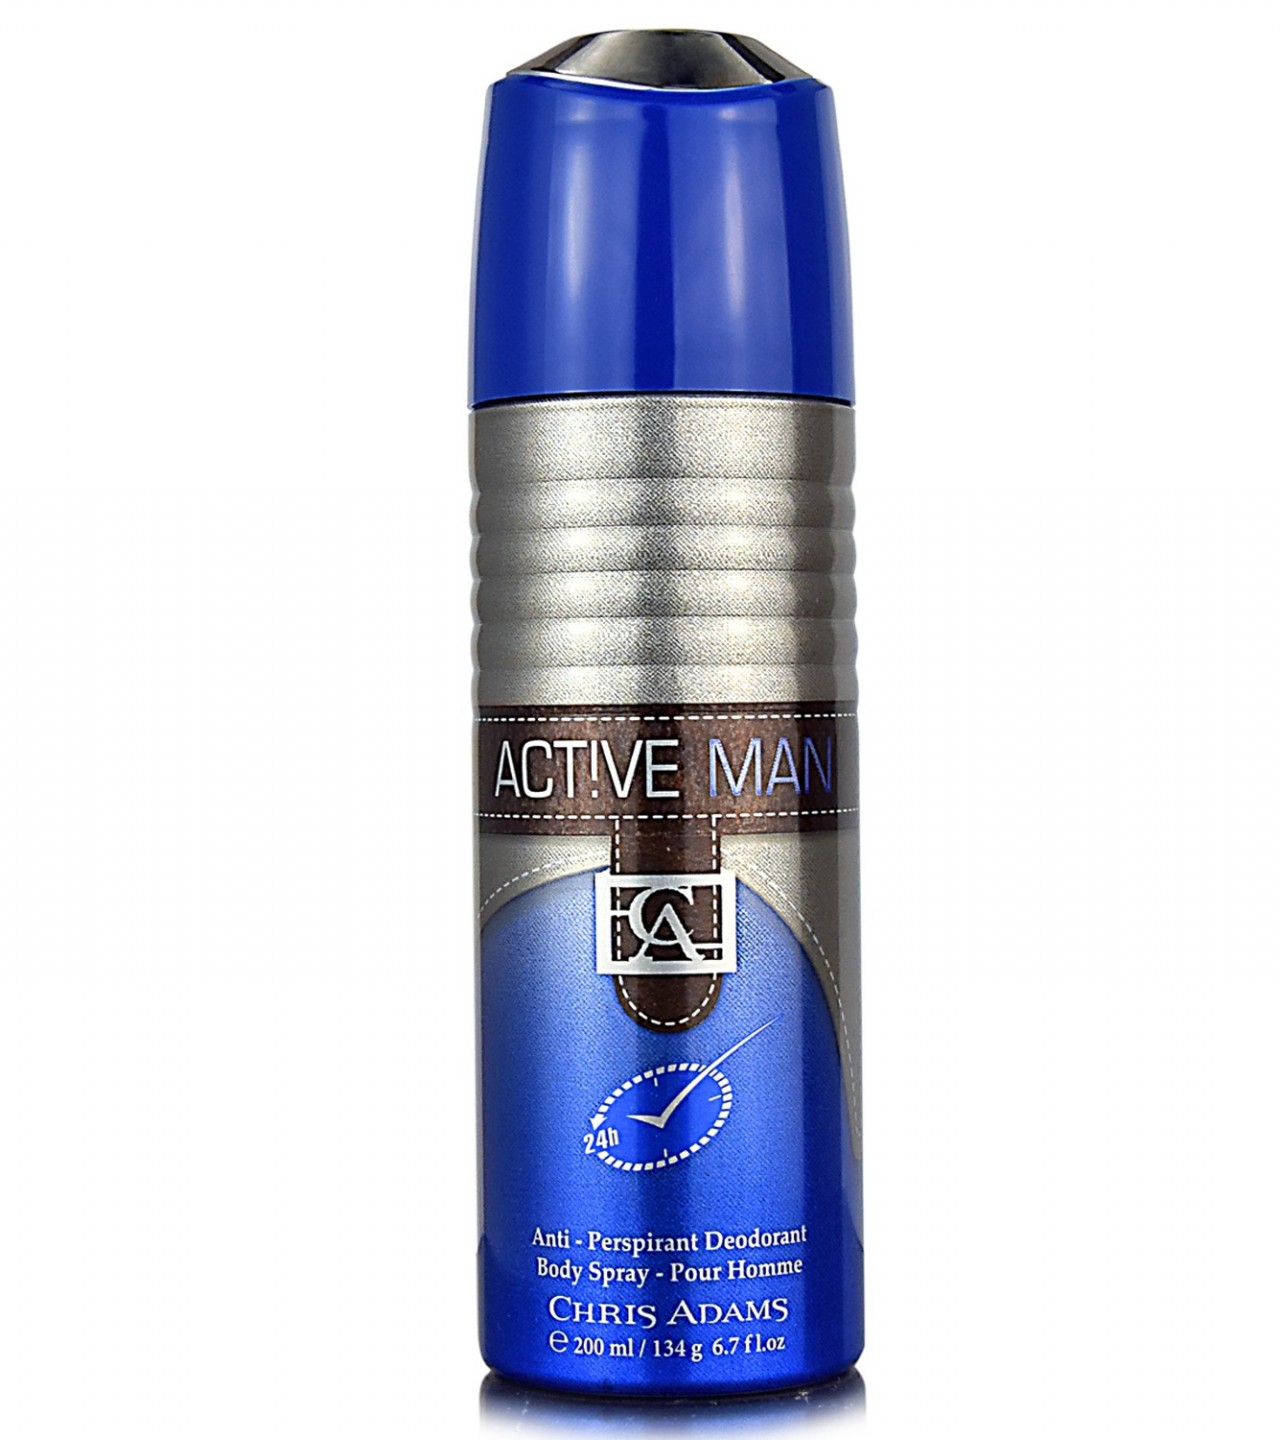 Chris Adams Active Man Body Spray Deodorant For Men - 200 ml